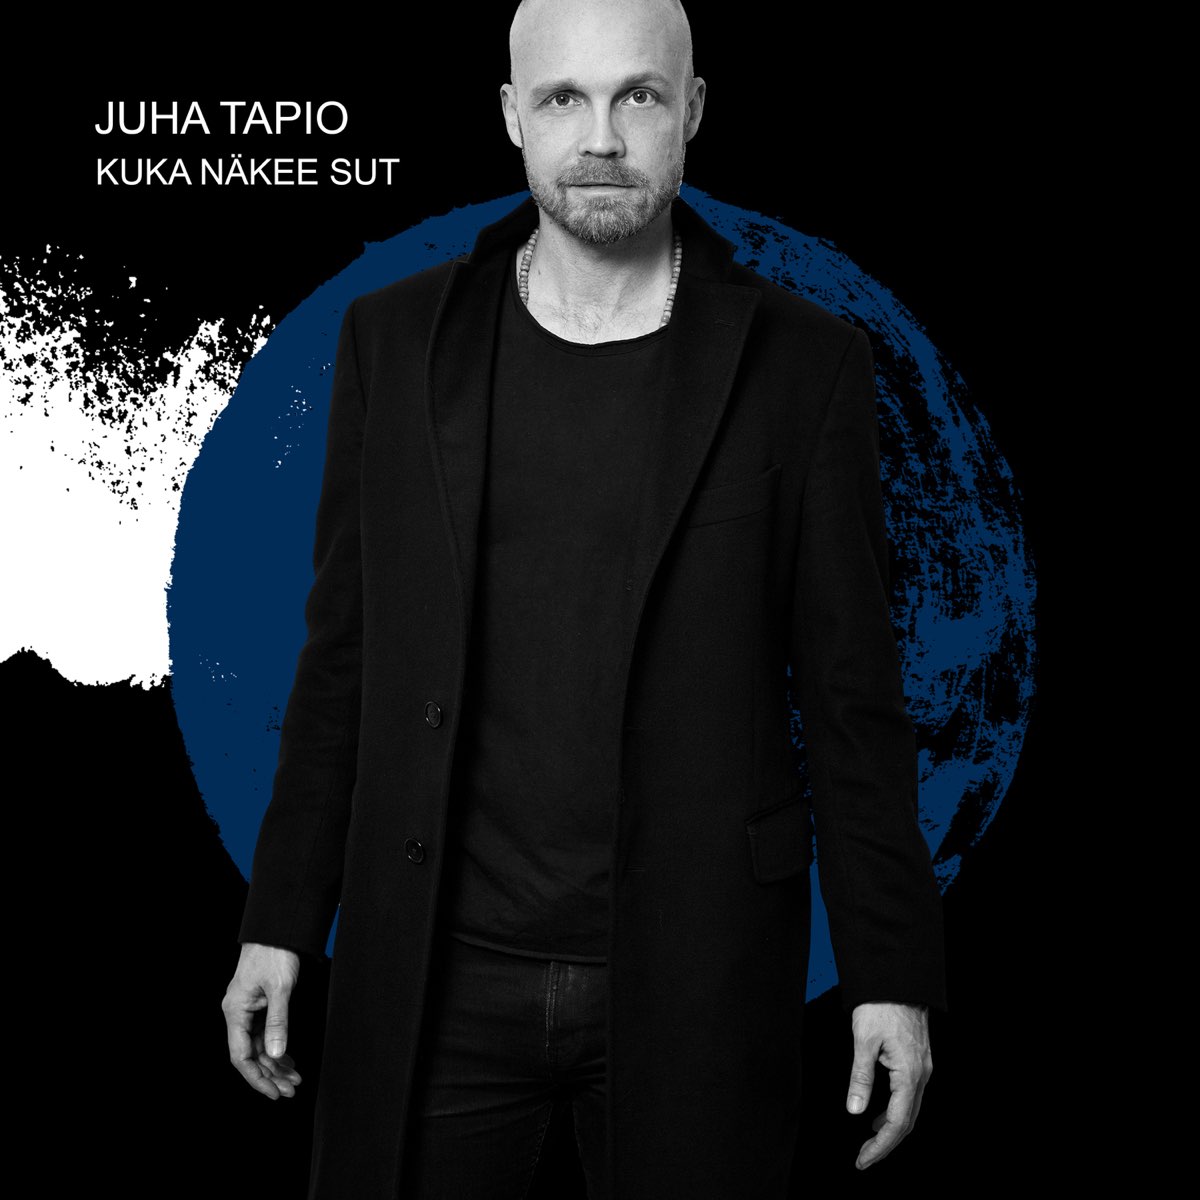 Kuka näkee sut - Single by Juha Tapio on Apple Music